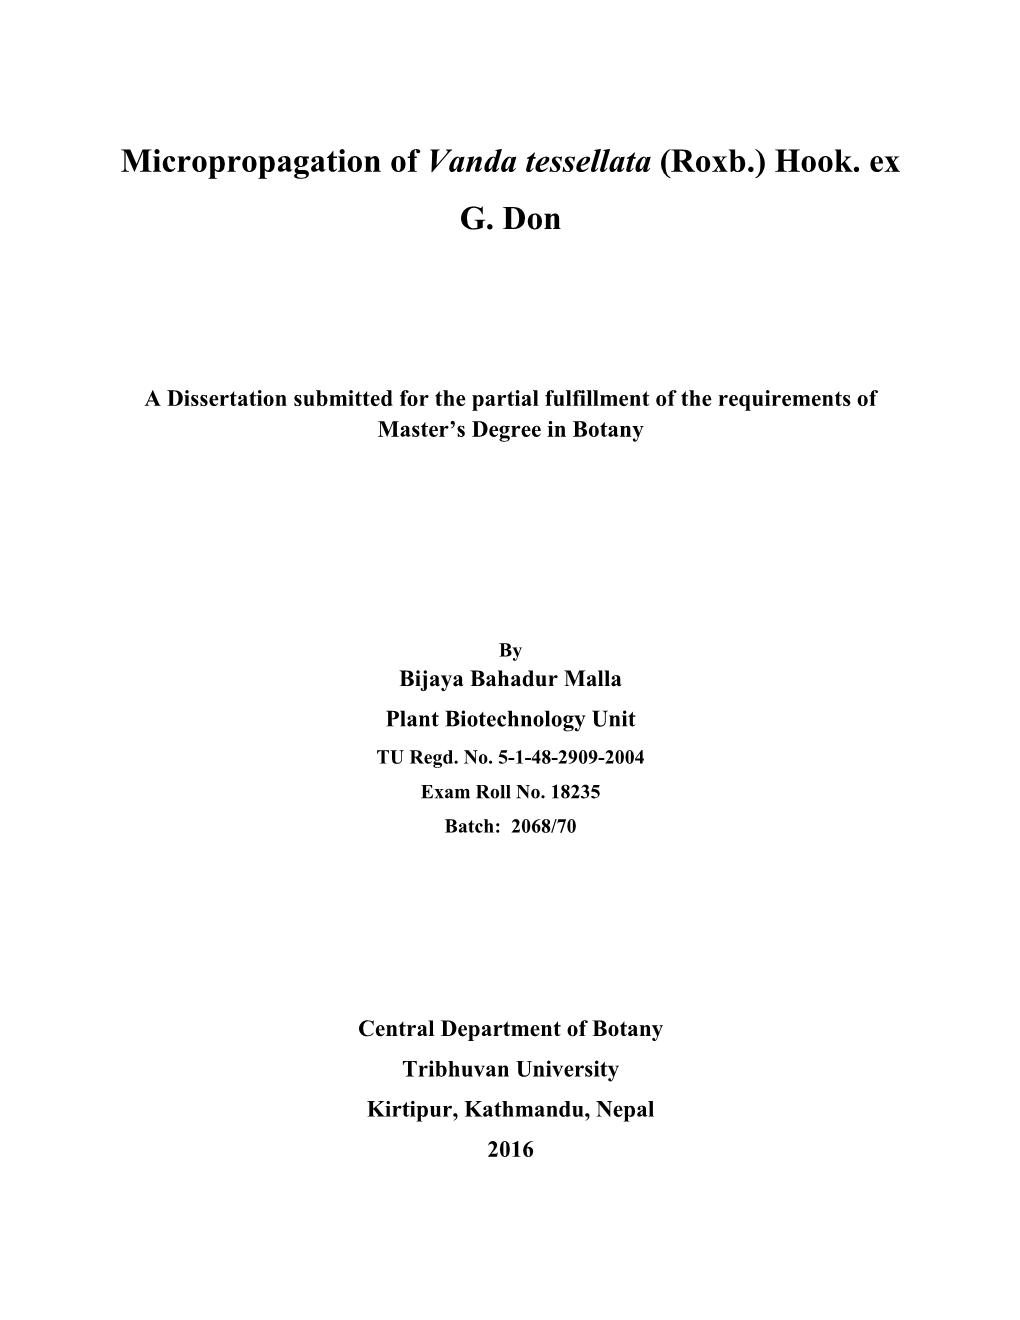 Micropropagation of Vanda Tessellata (Roxb.) Hook. Ex G. Don